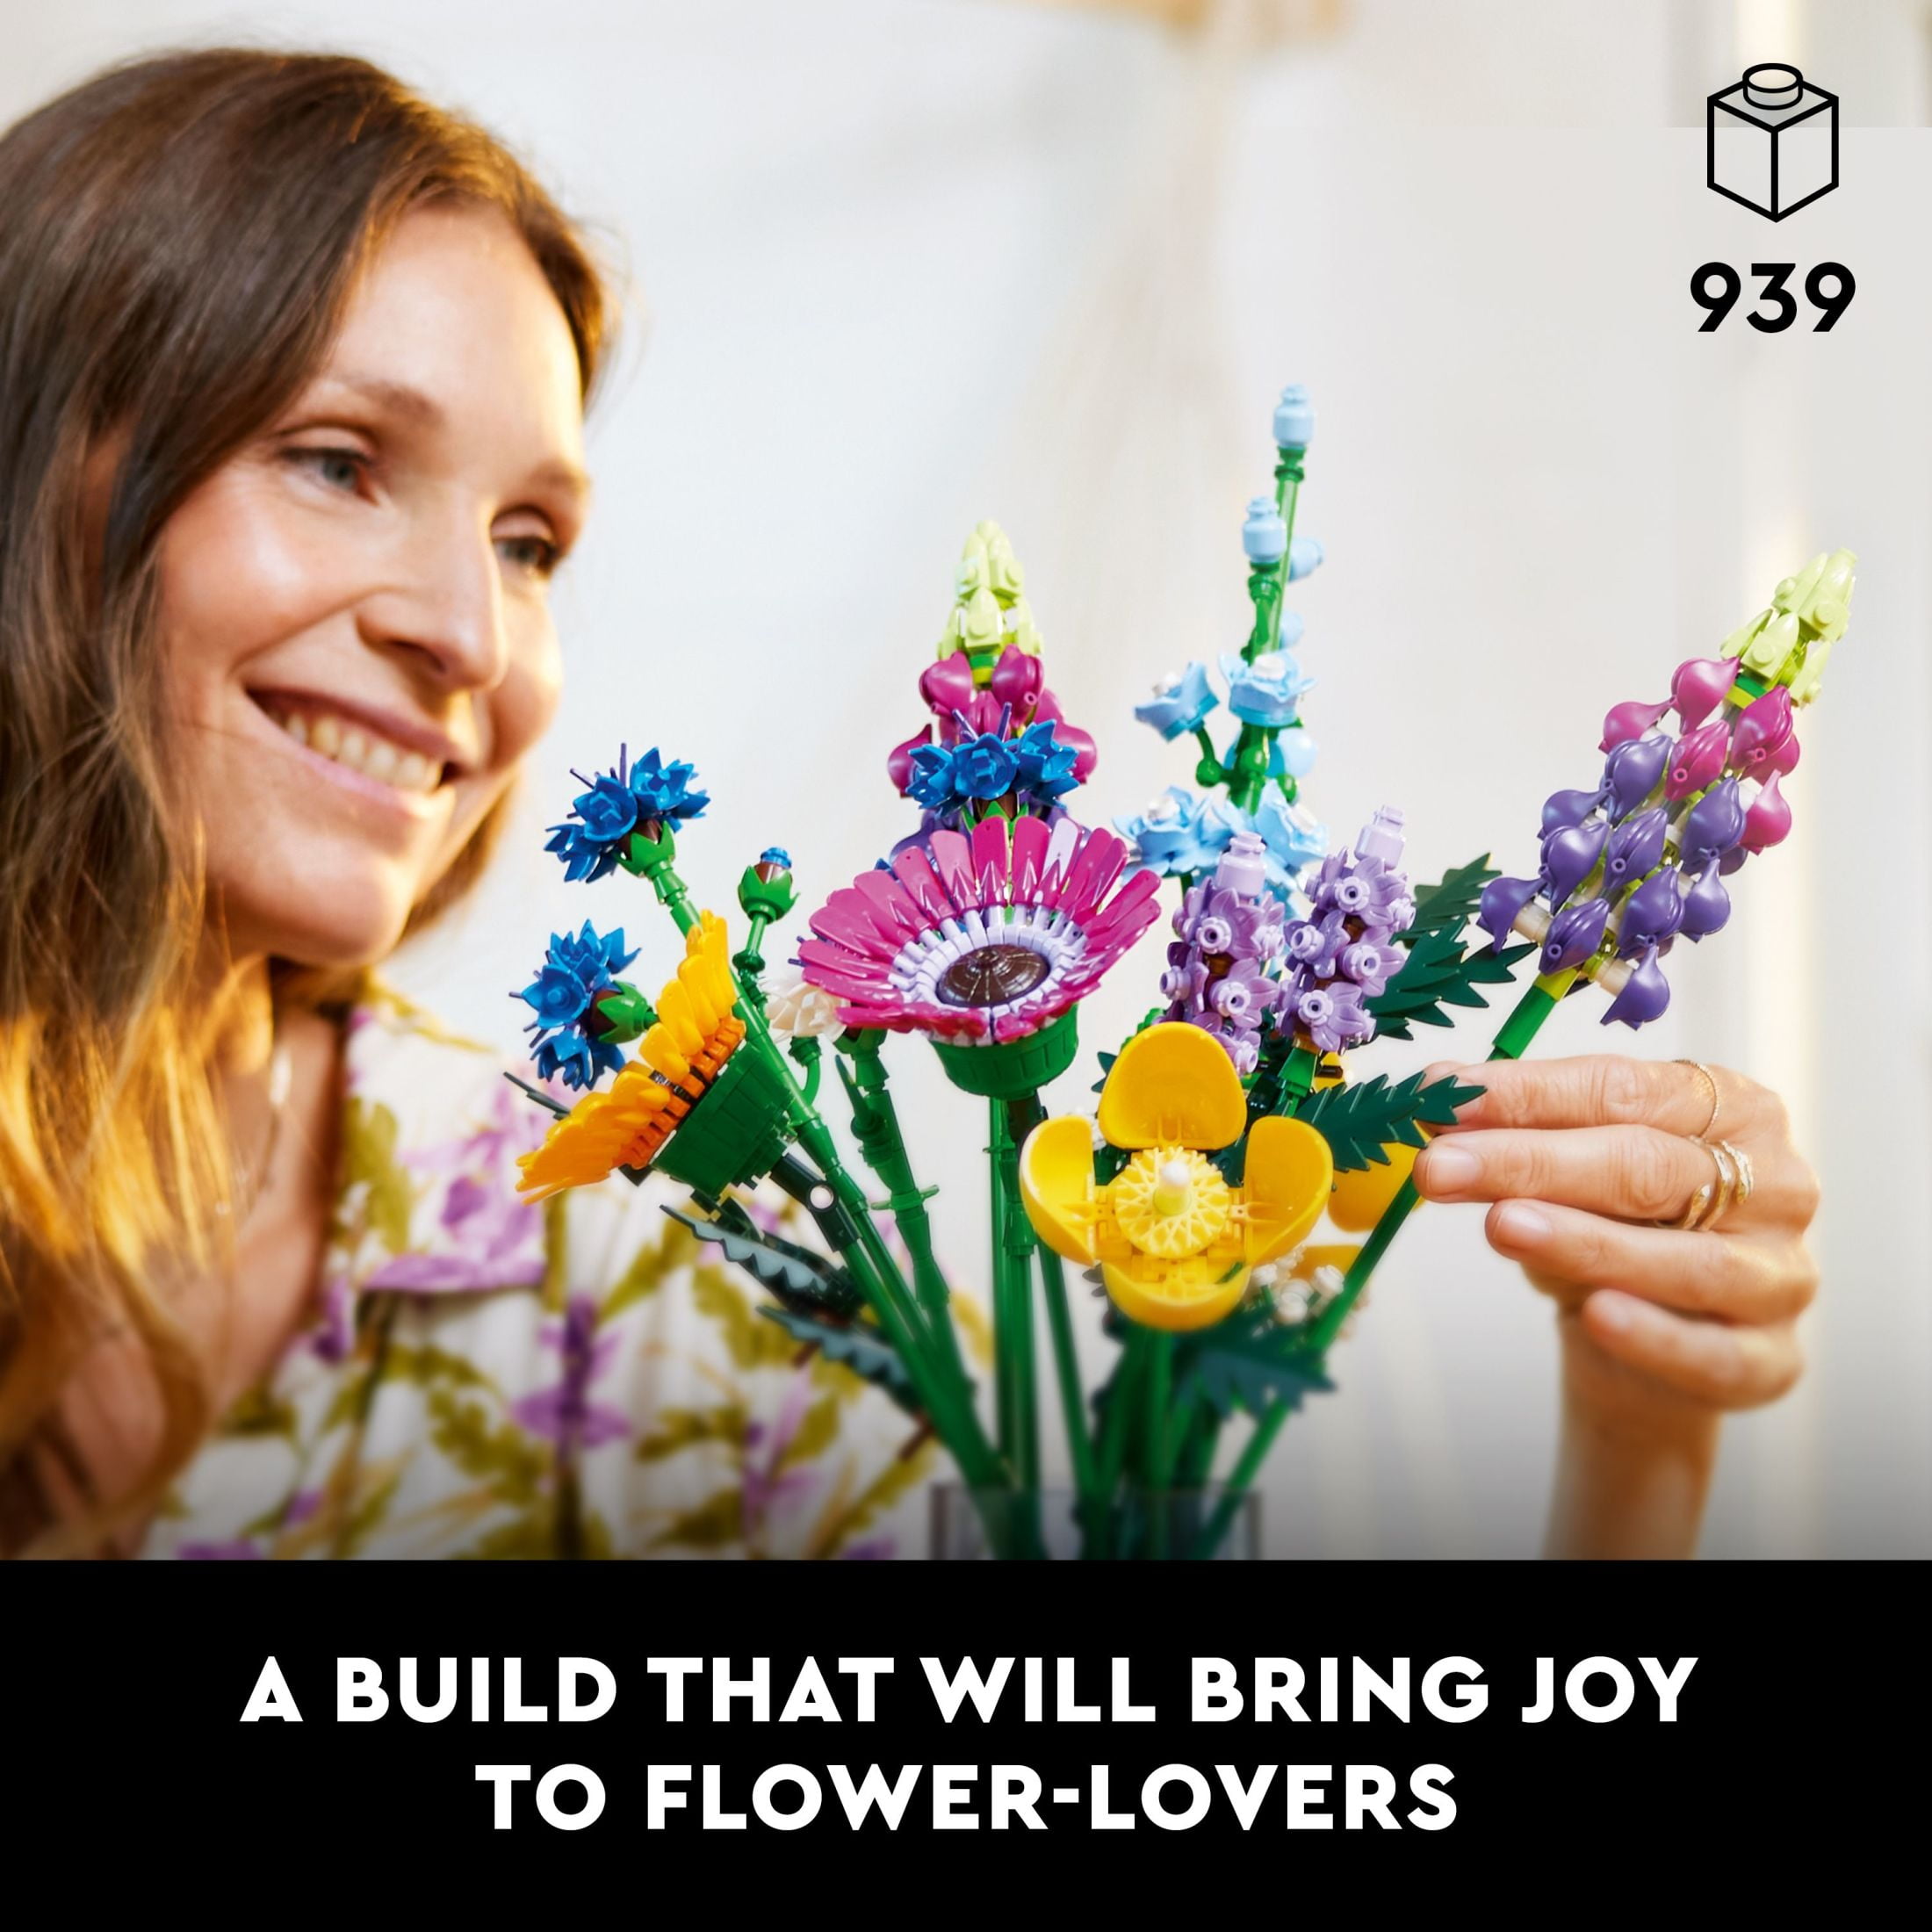 Lego Rose Bouquet @Walmart 🌹🥰 @LEGO #legoflowers #legoflowerbouquet , LEGO Flowers Bouquet